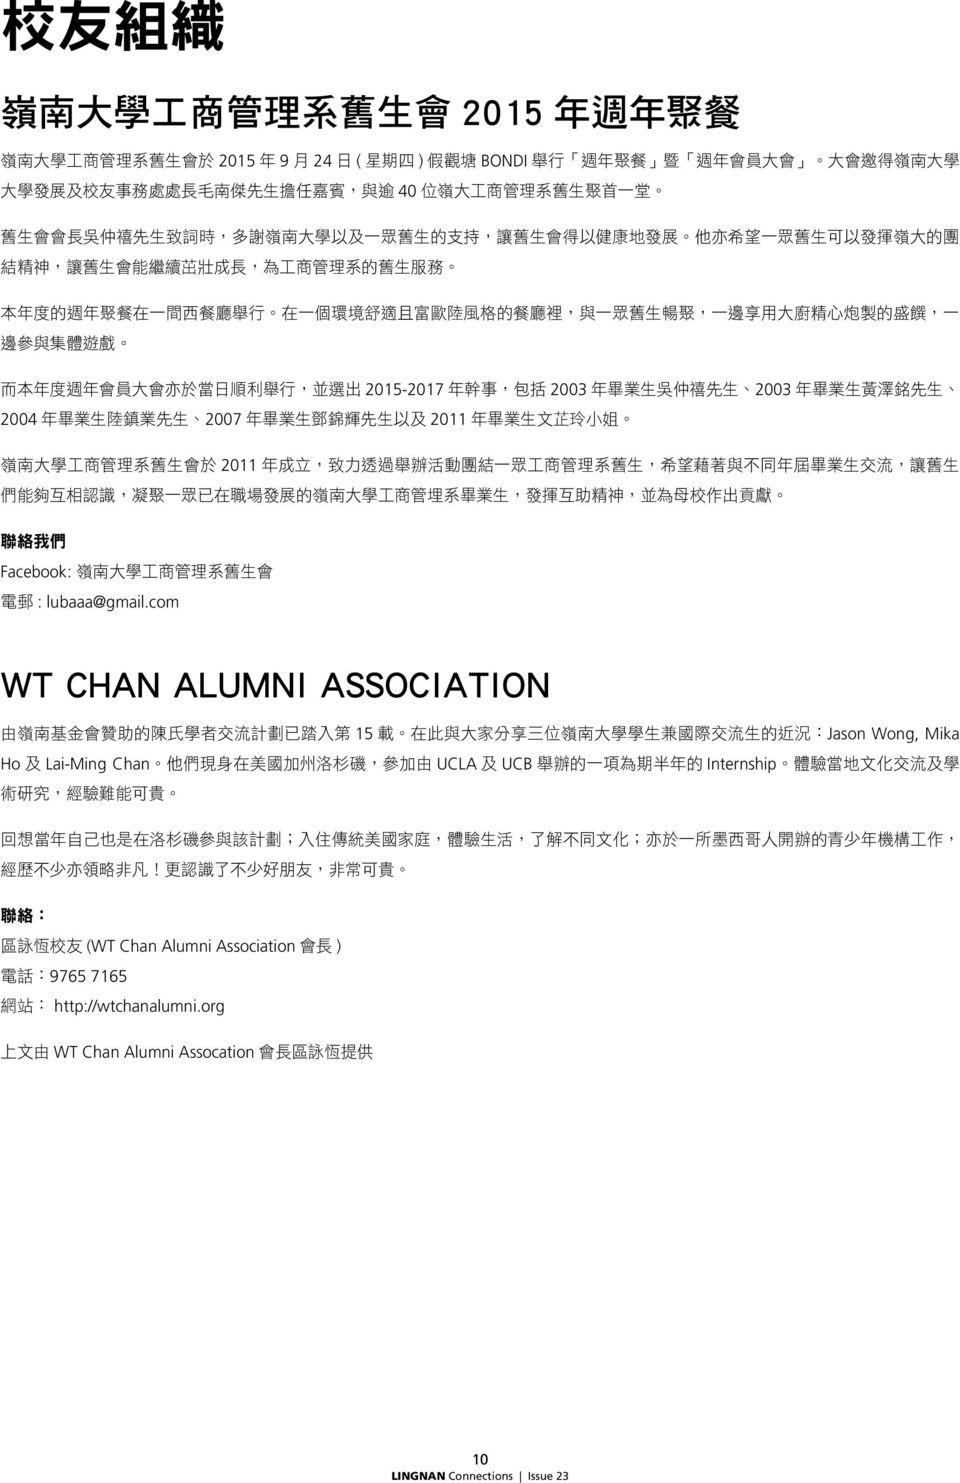 com WT CHAN ALUMNI ASSOCIATION 15 Jason Wong, Mika Ho Lai-Ming Chan UCLA UCB